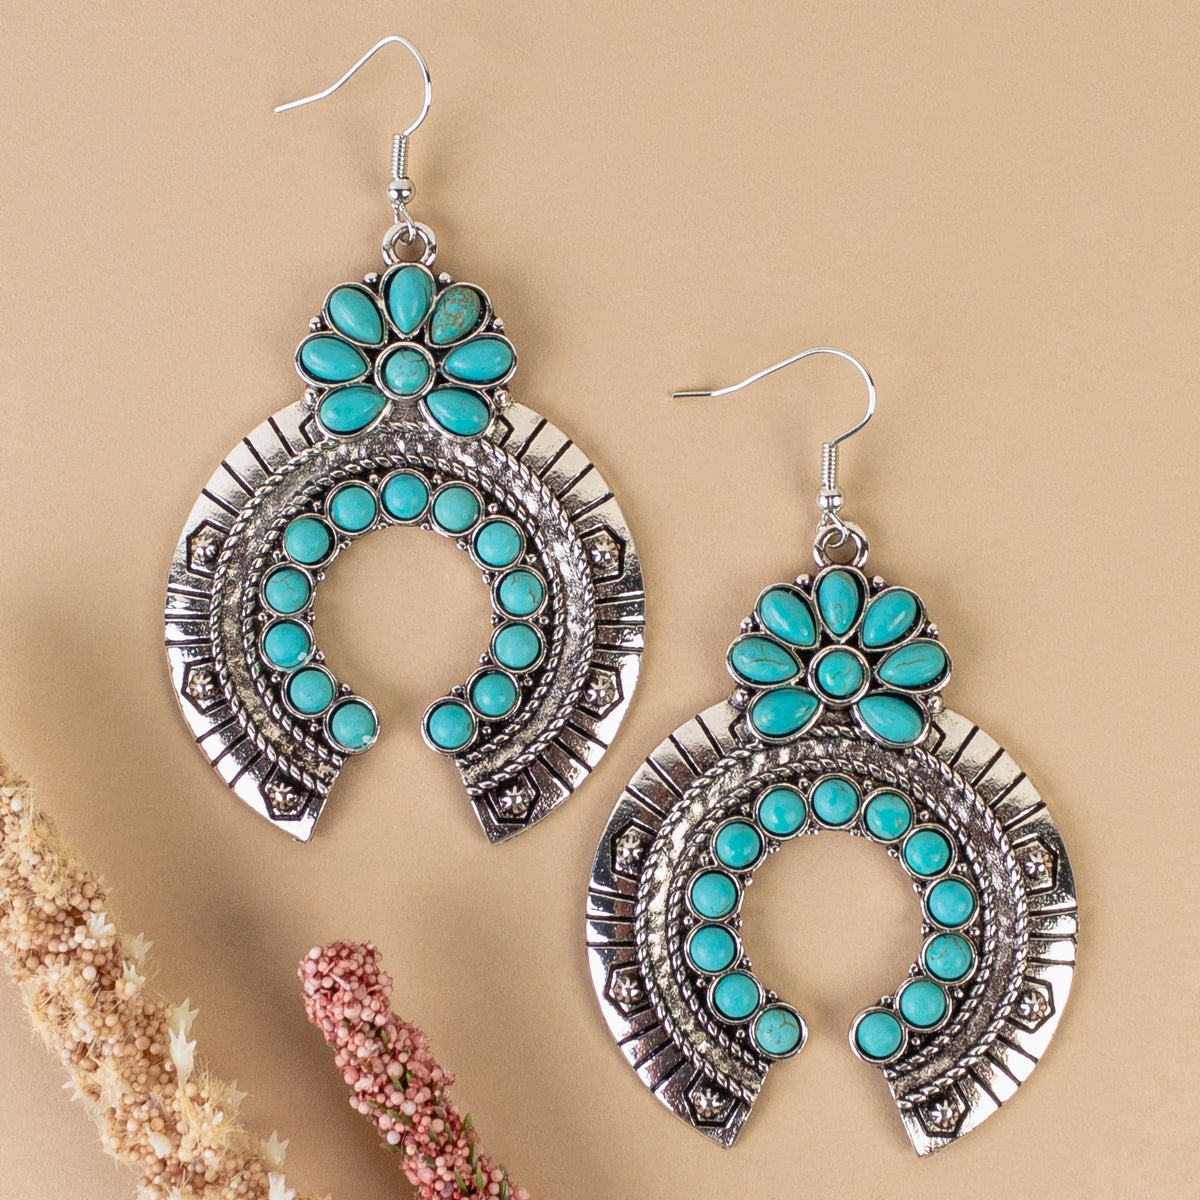 93144 - Western Earrings - Turquoise & Silver